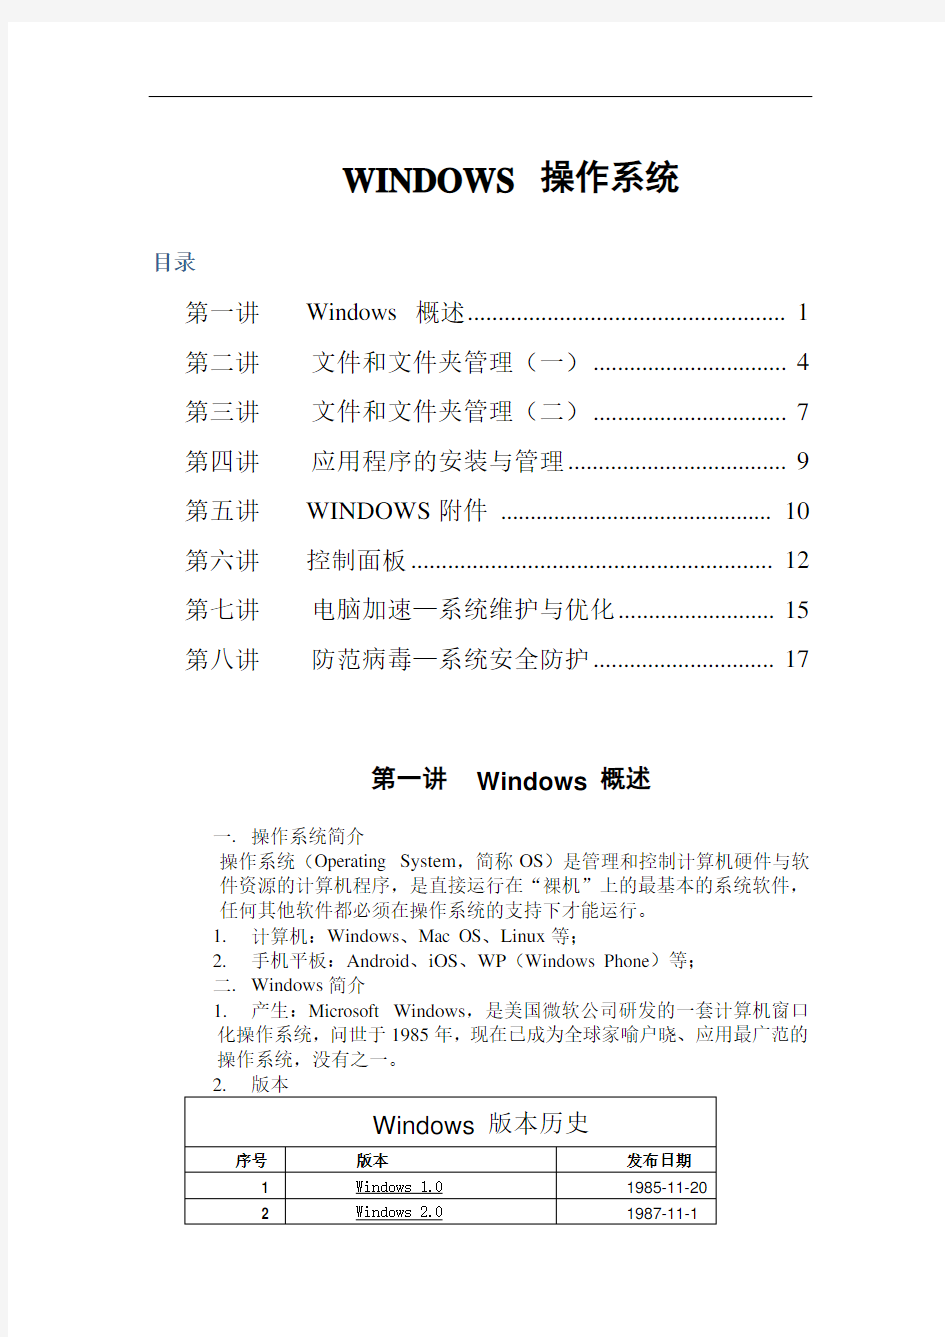 WINDOWS 操作系统教案(很详细,由浅入深,全面掌握)